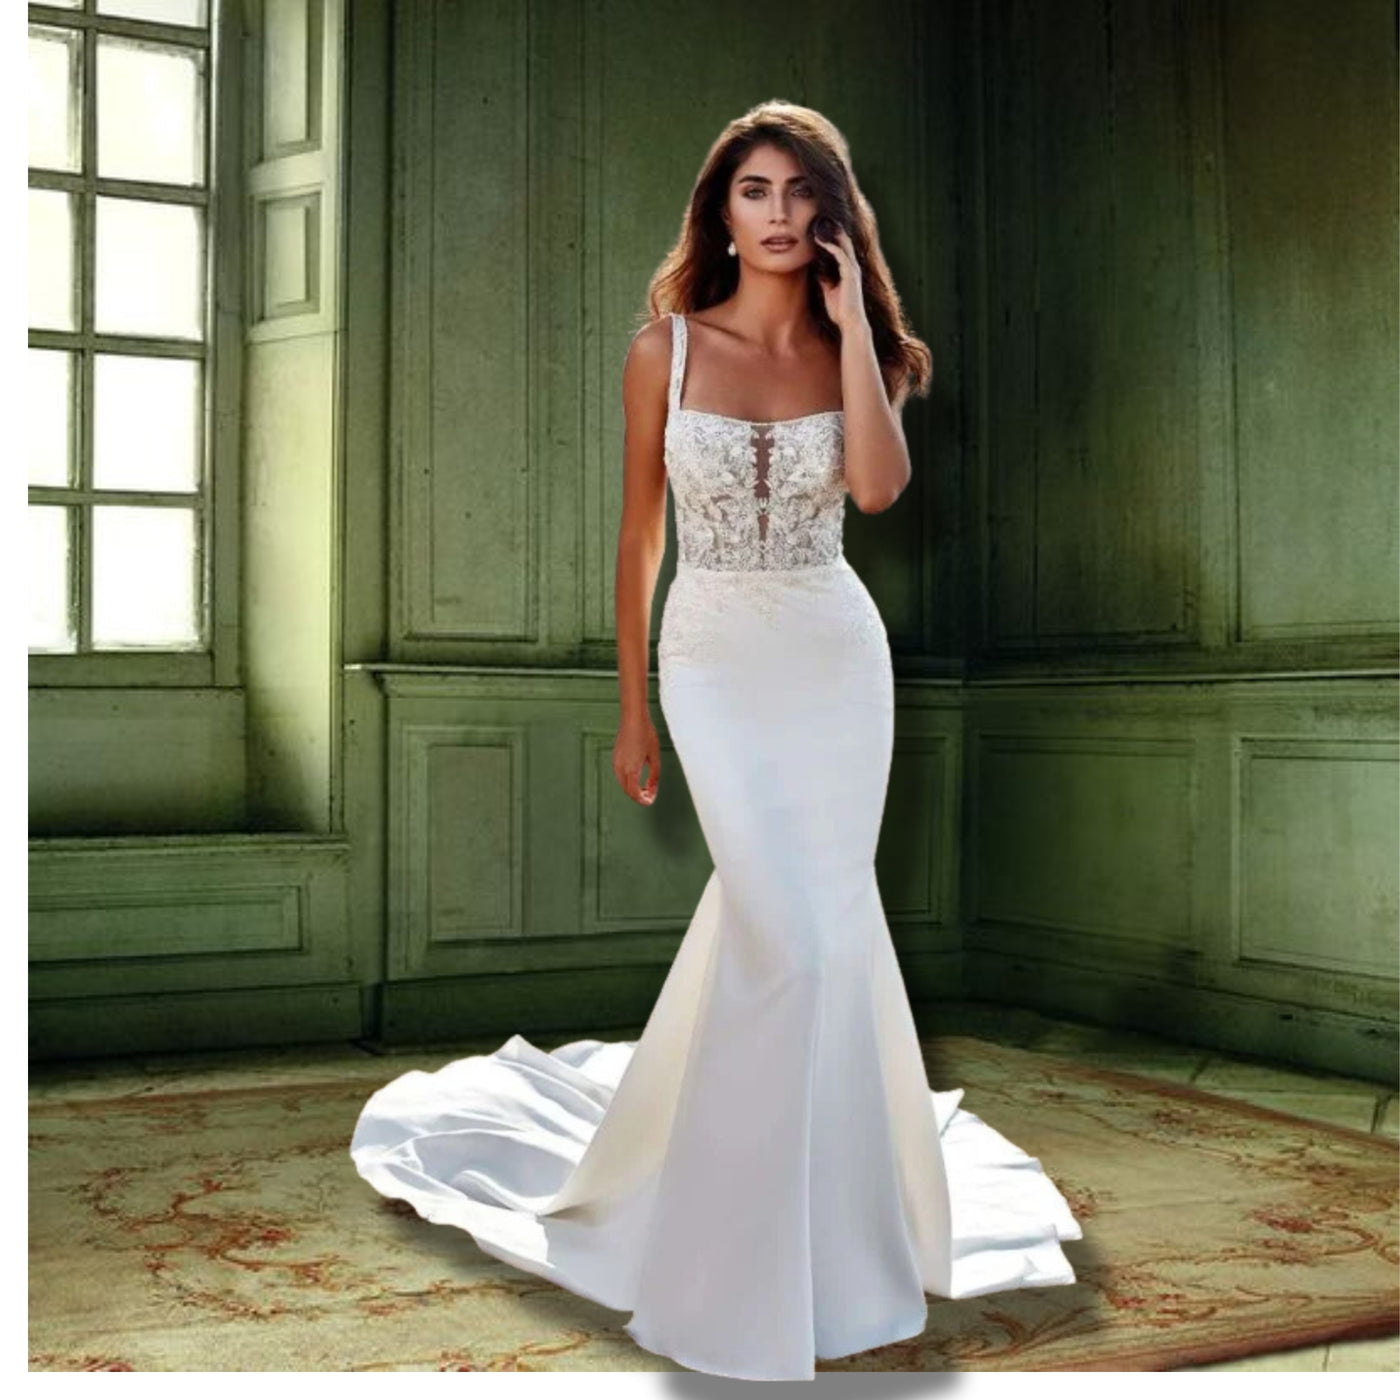 EMILYA<br>Elegant Mermaid Lace Open Back White/Ivory/Champagne Satin Square Collar Spaghetti Strap Bridal Gown